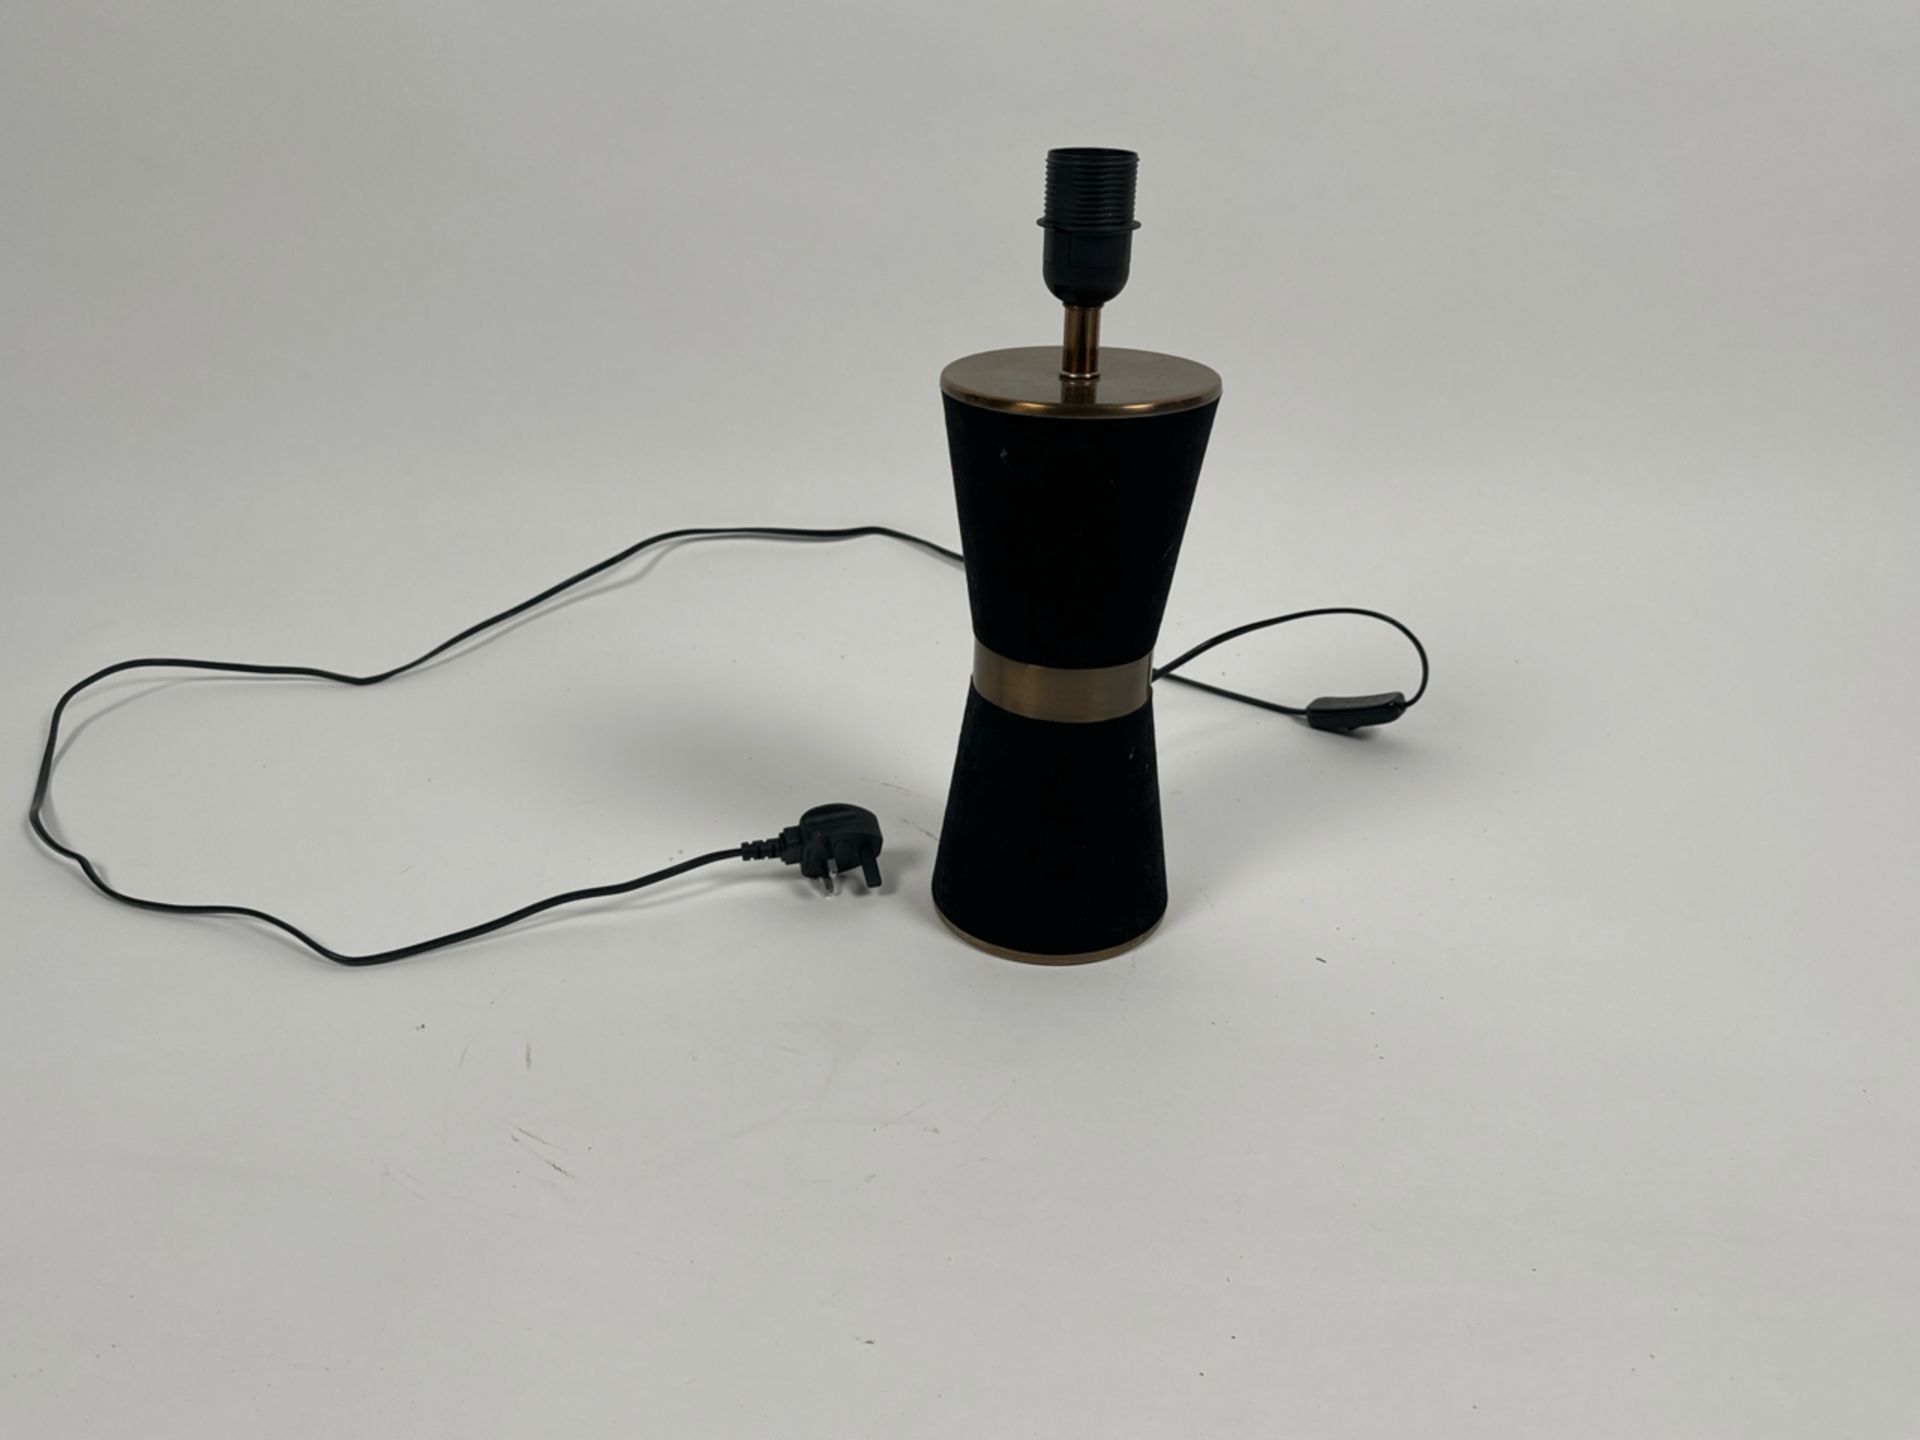 Black Table Lamp Designed By Amara - Image 3 of 4